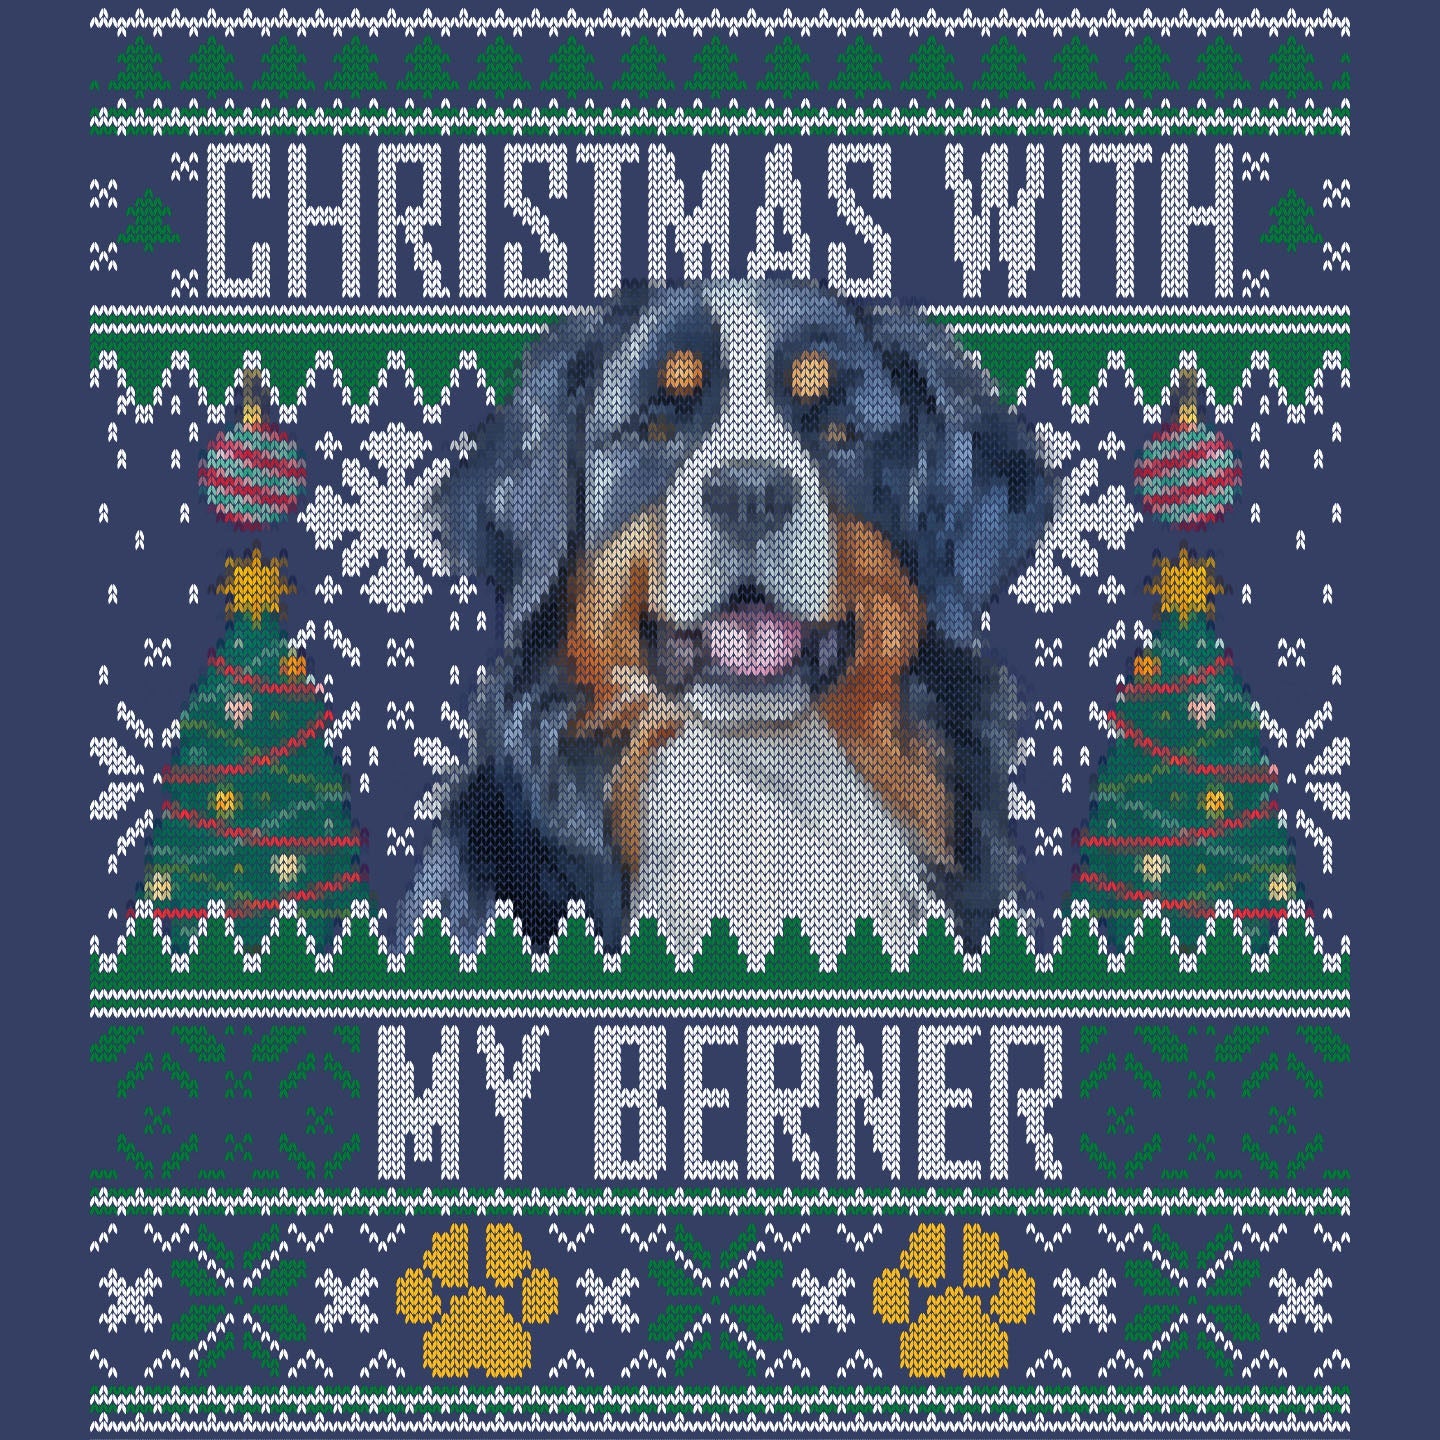 Ugly Sweater Christmas with My Bernese Mountain Dog - Adult Unisex Crewneck Sweatshirt